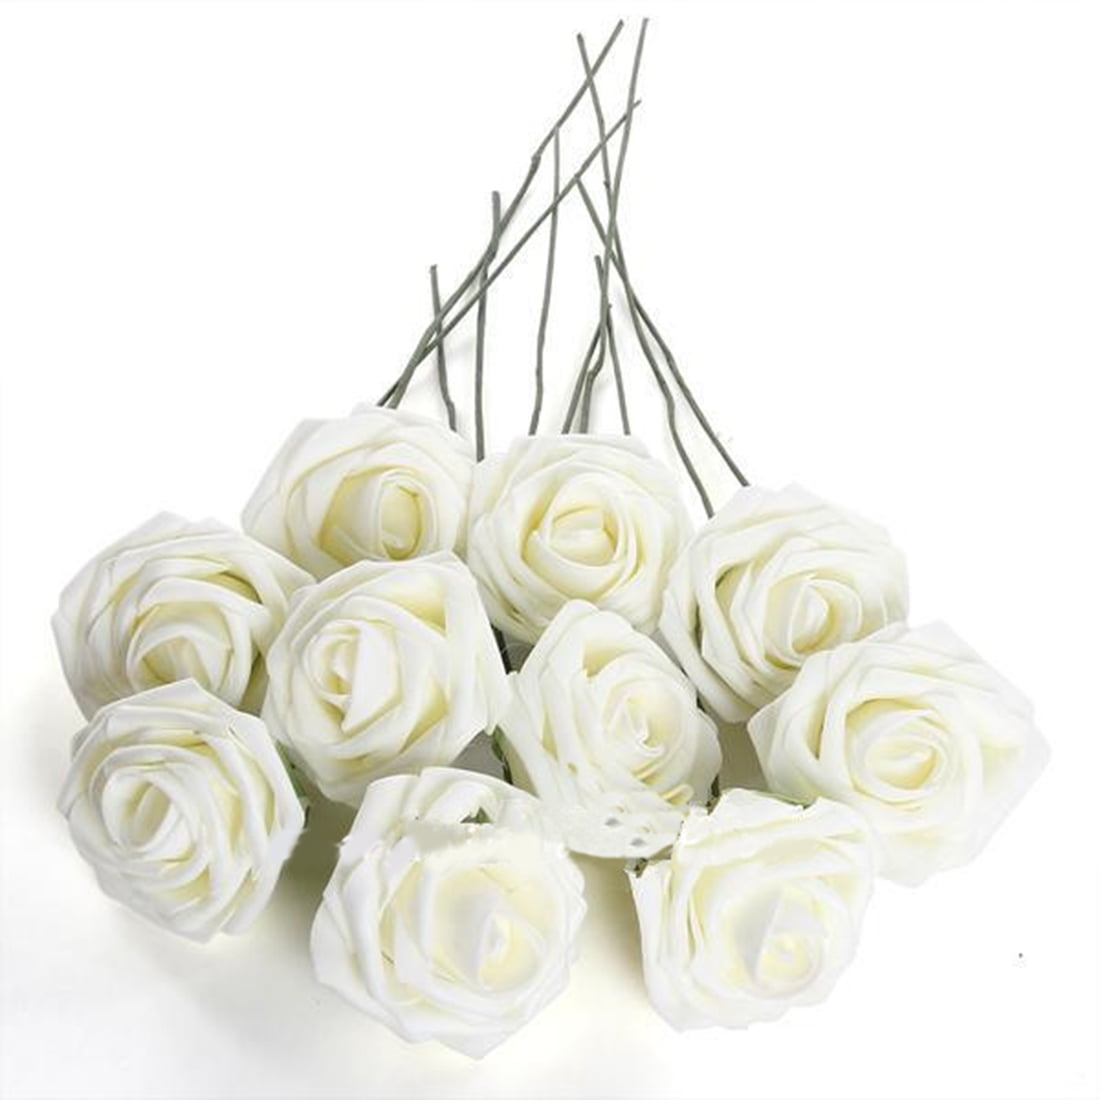 6 cm Colourfast Artificial Foam Rose Wedding Craft Flowers WEDDING Cake Pews NEW 